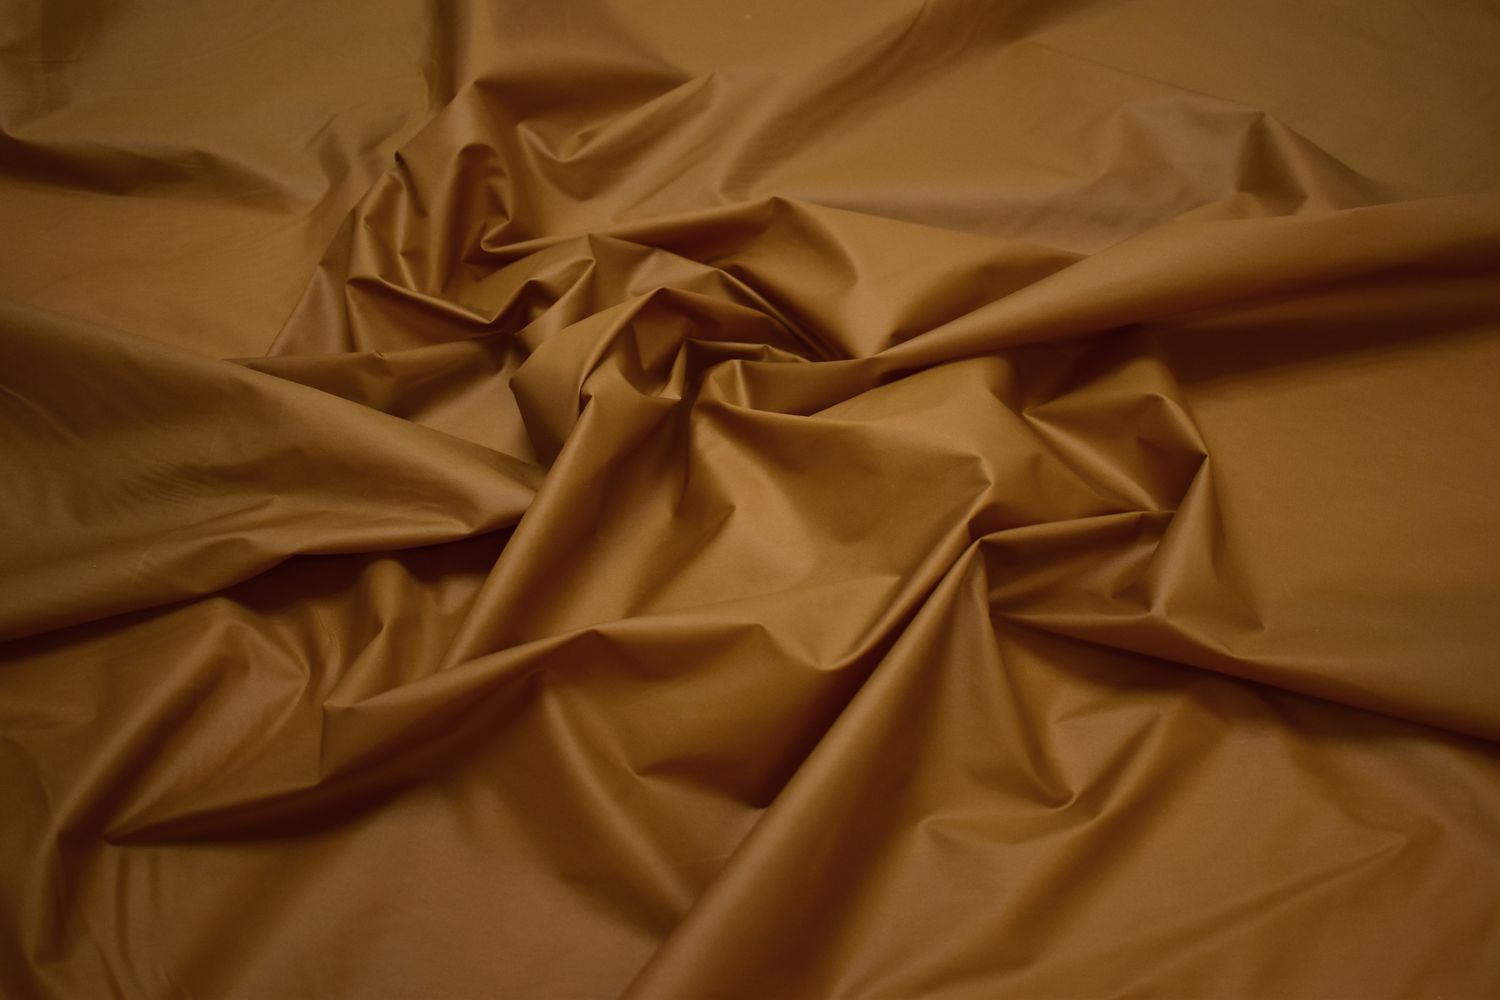 Курточная коричневая ткань W-128659